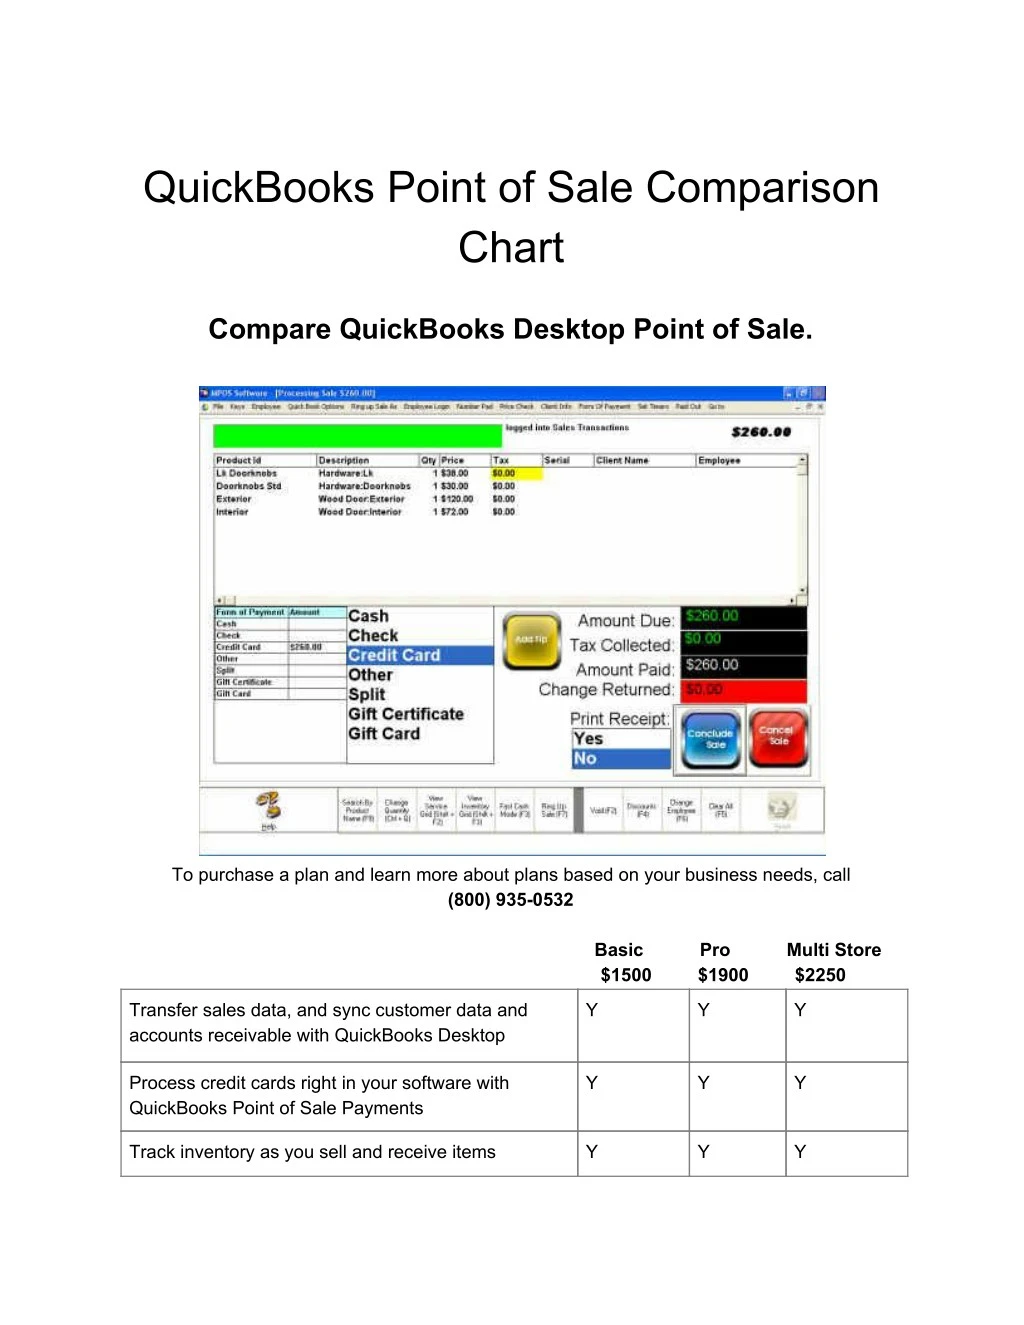 quickbooks point of sale comparison chart